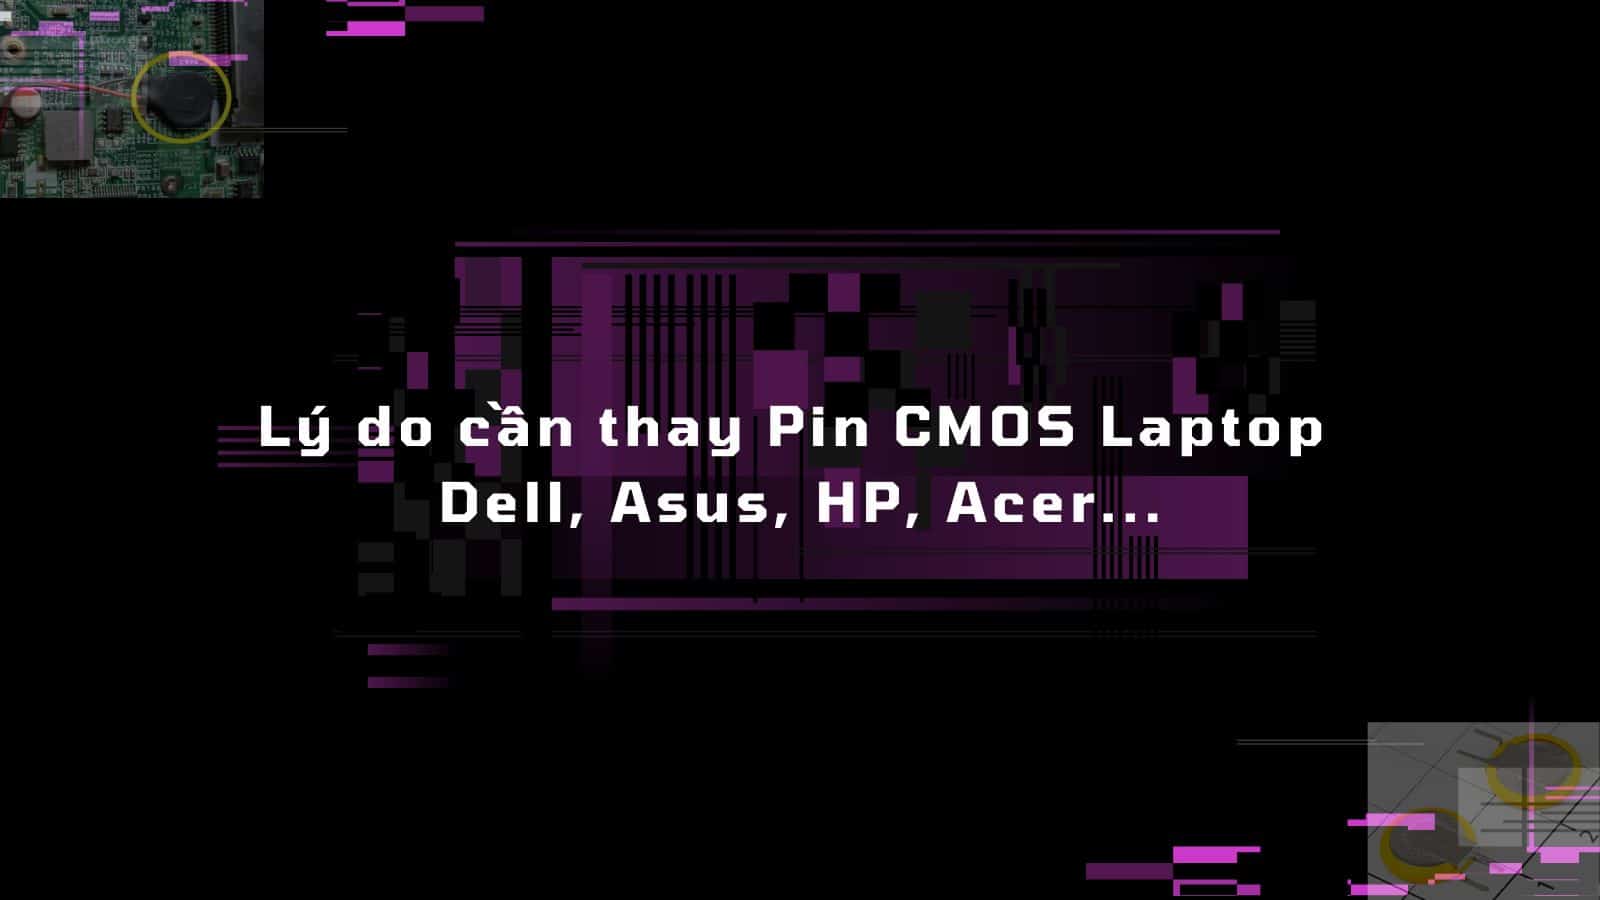 Lý do cần thay Pin CMOS Laptop Dell, Asus, HP, Acer... - Trâm Anh Laptop